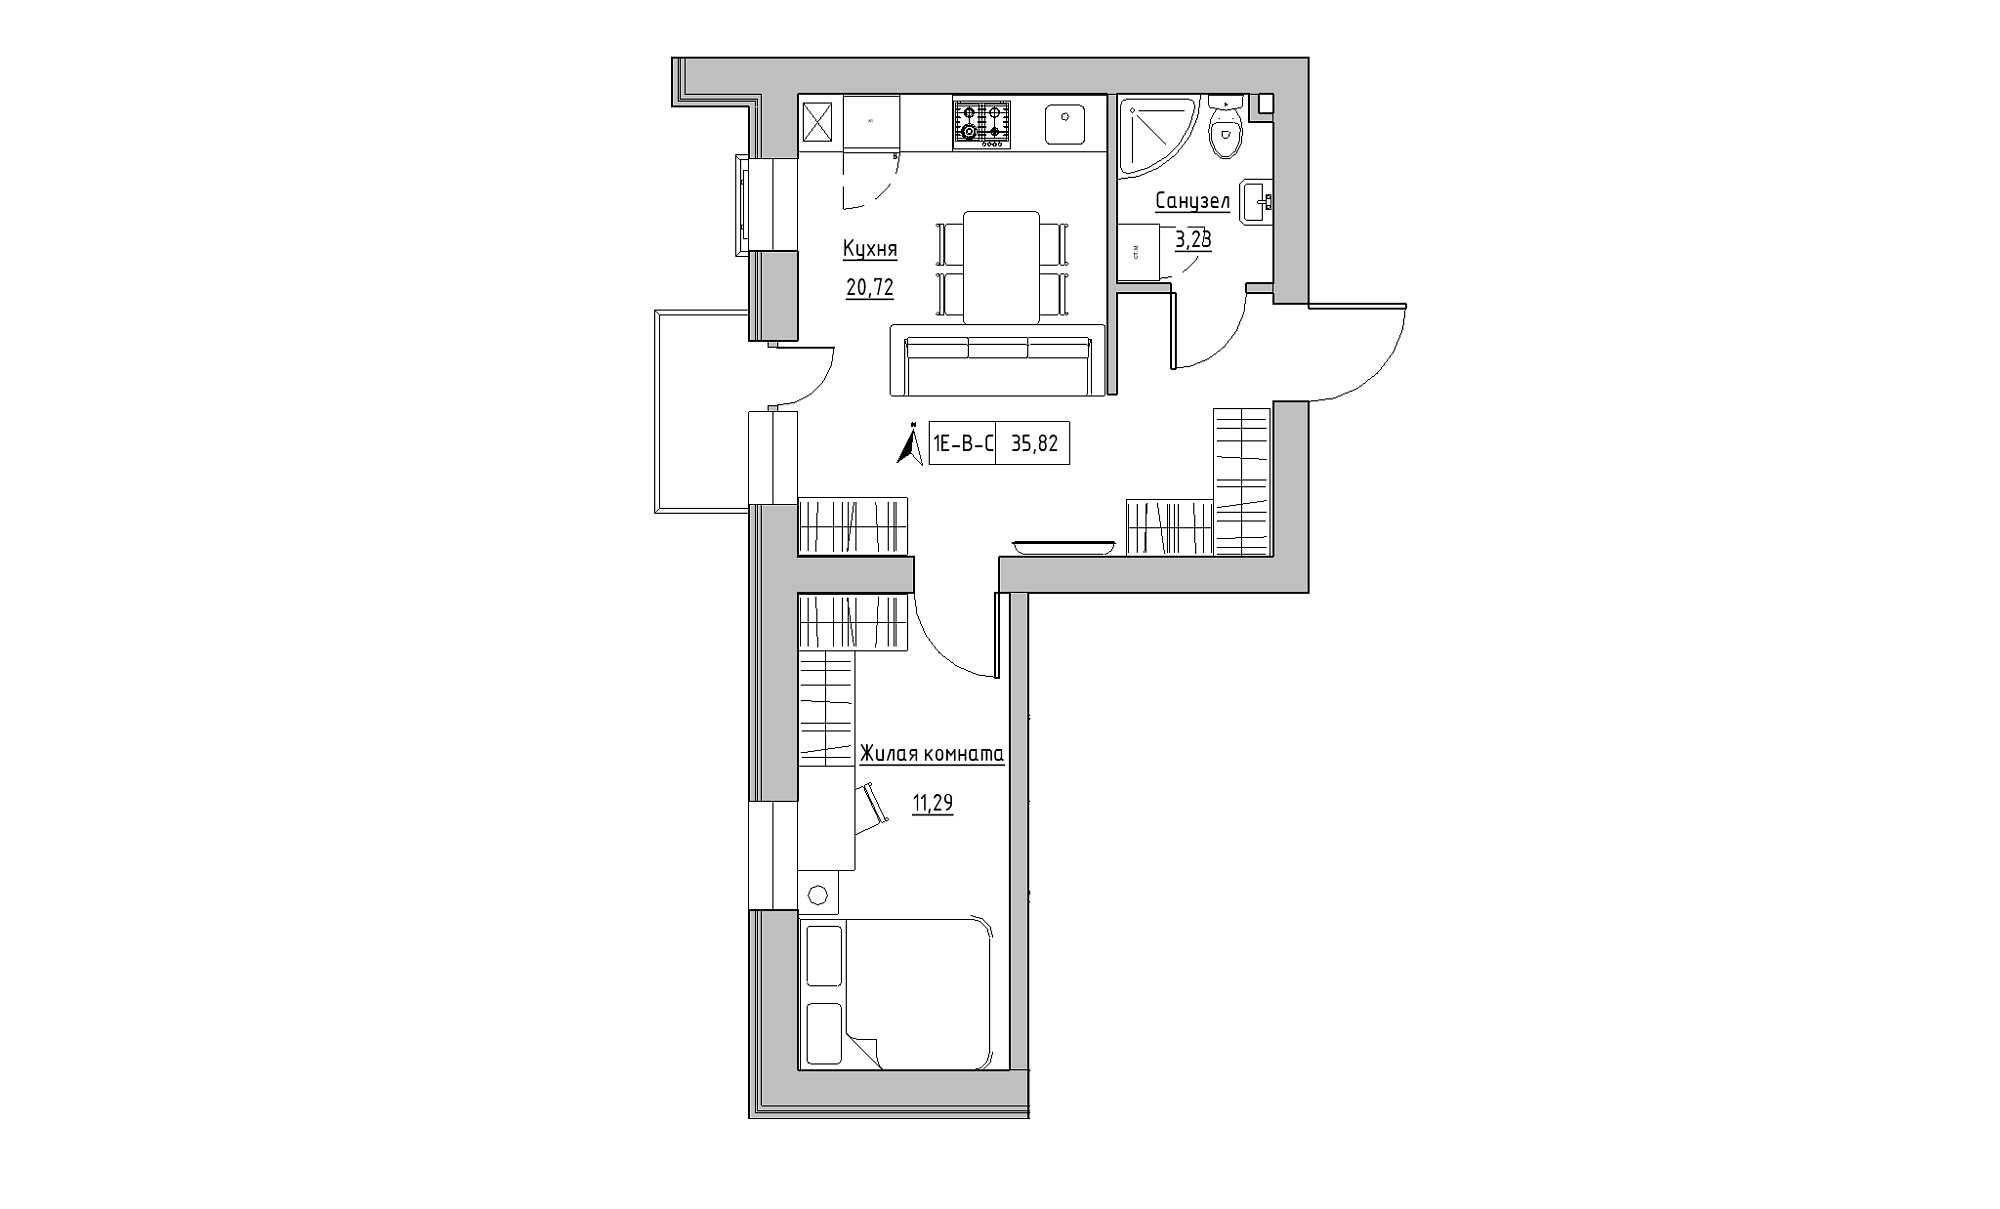 Planning 1-rm flats area 35.82m2, KS-016-04/0009.